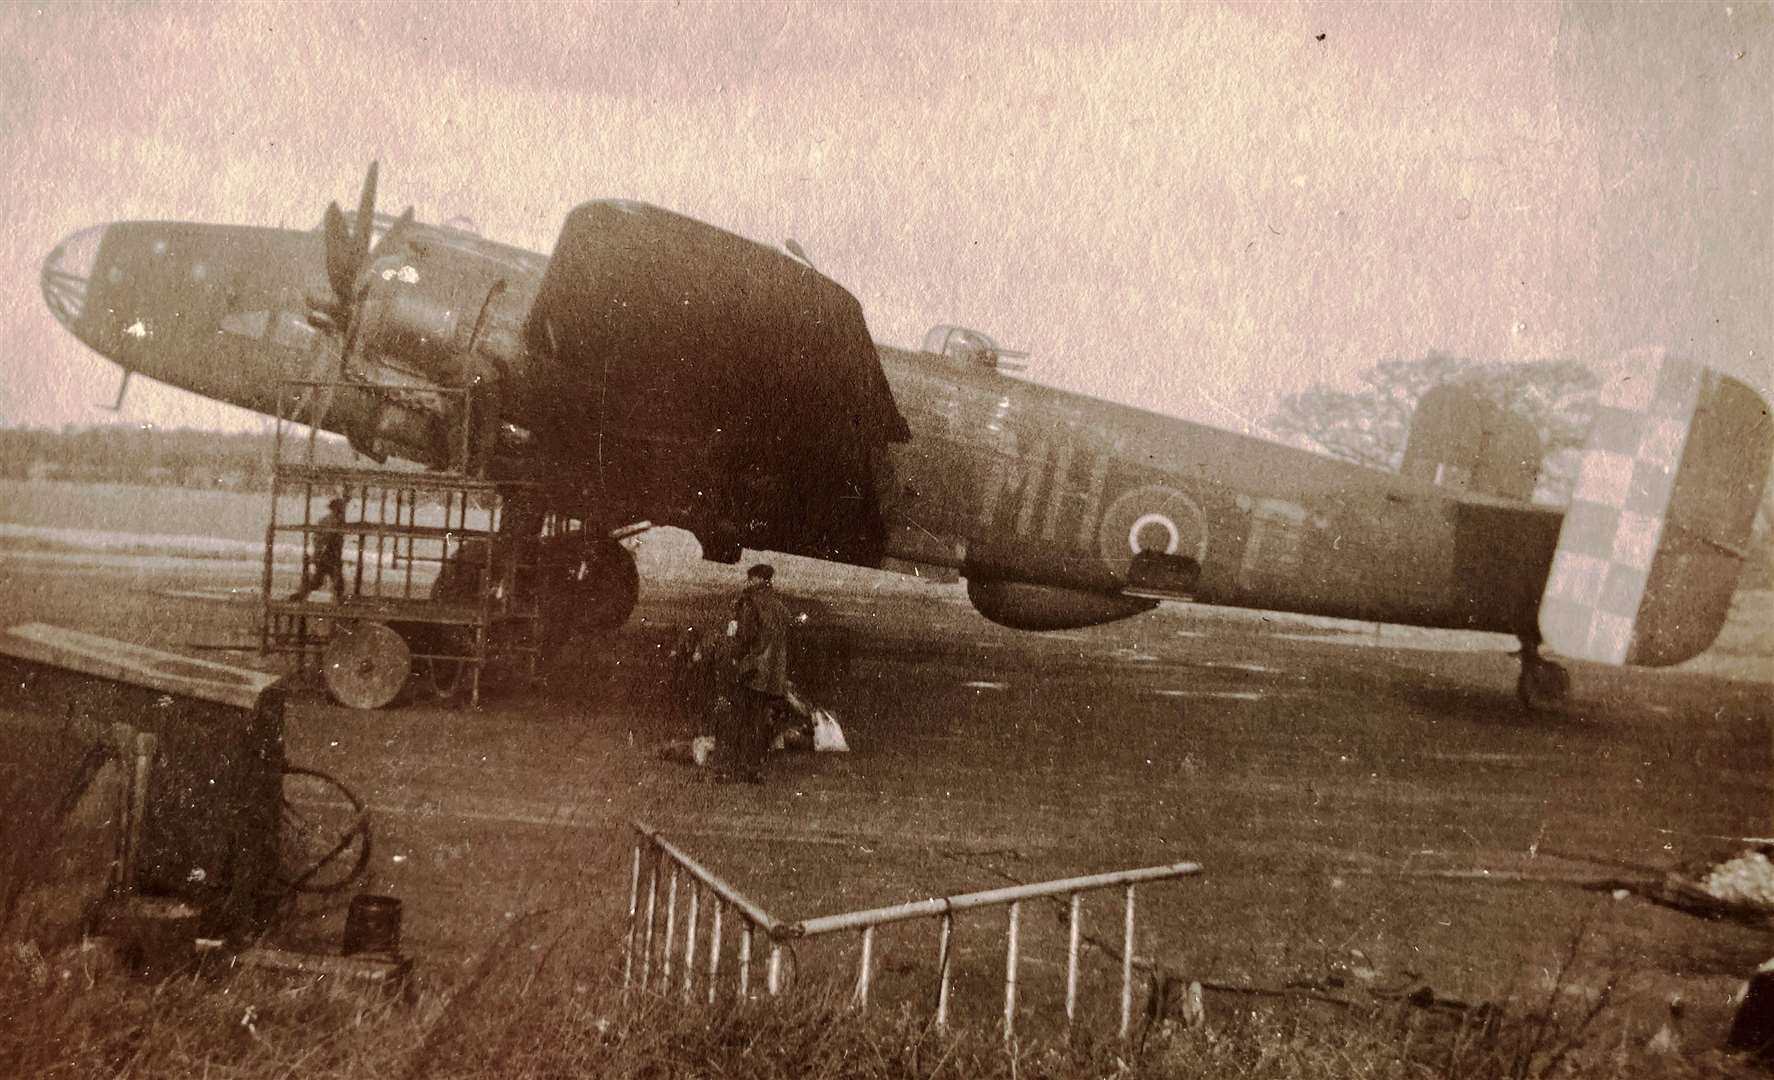 The Halifax bomber George flew